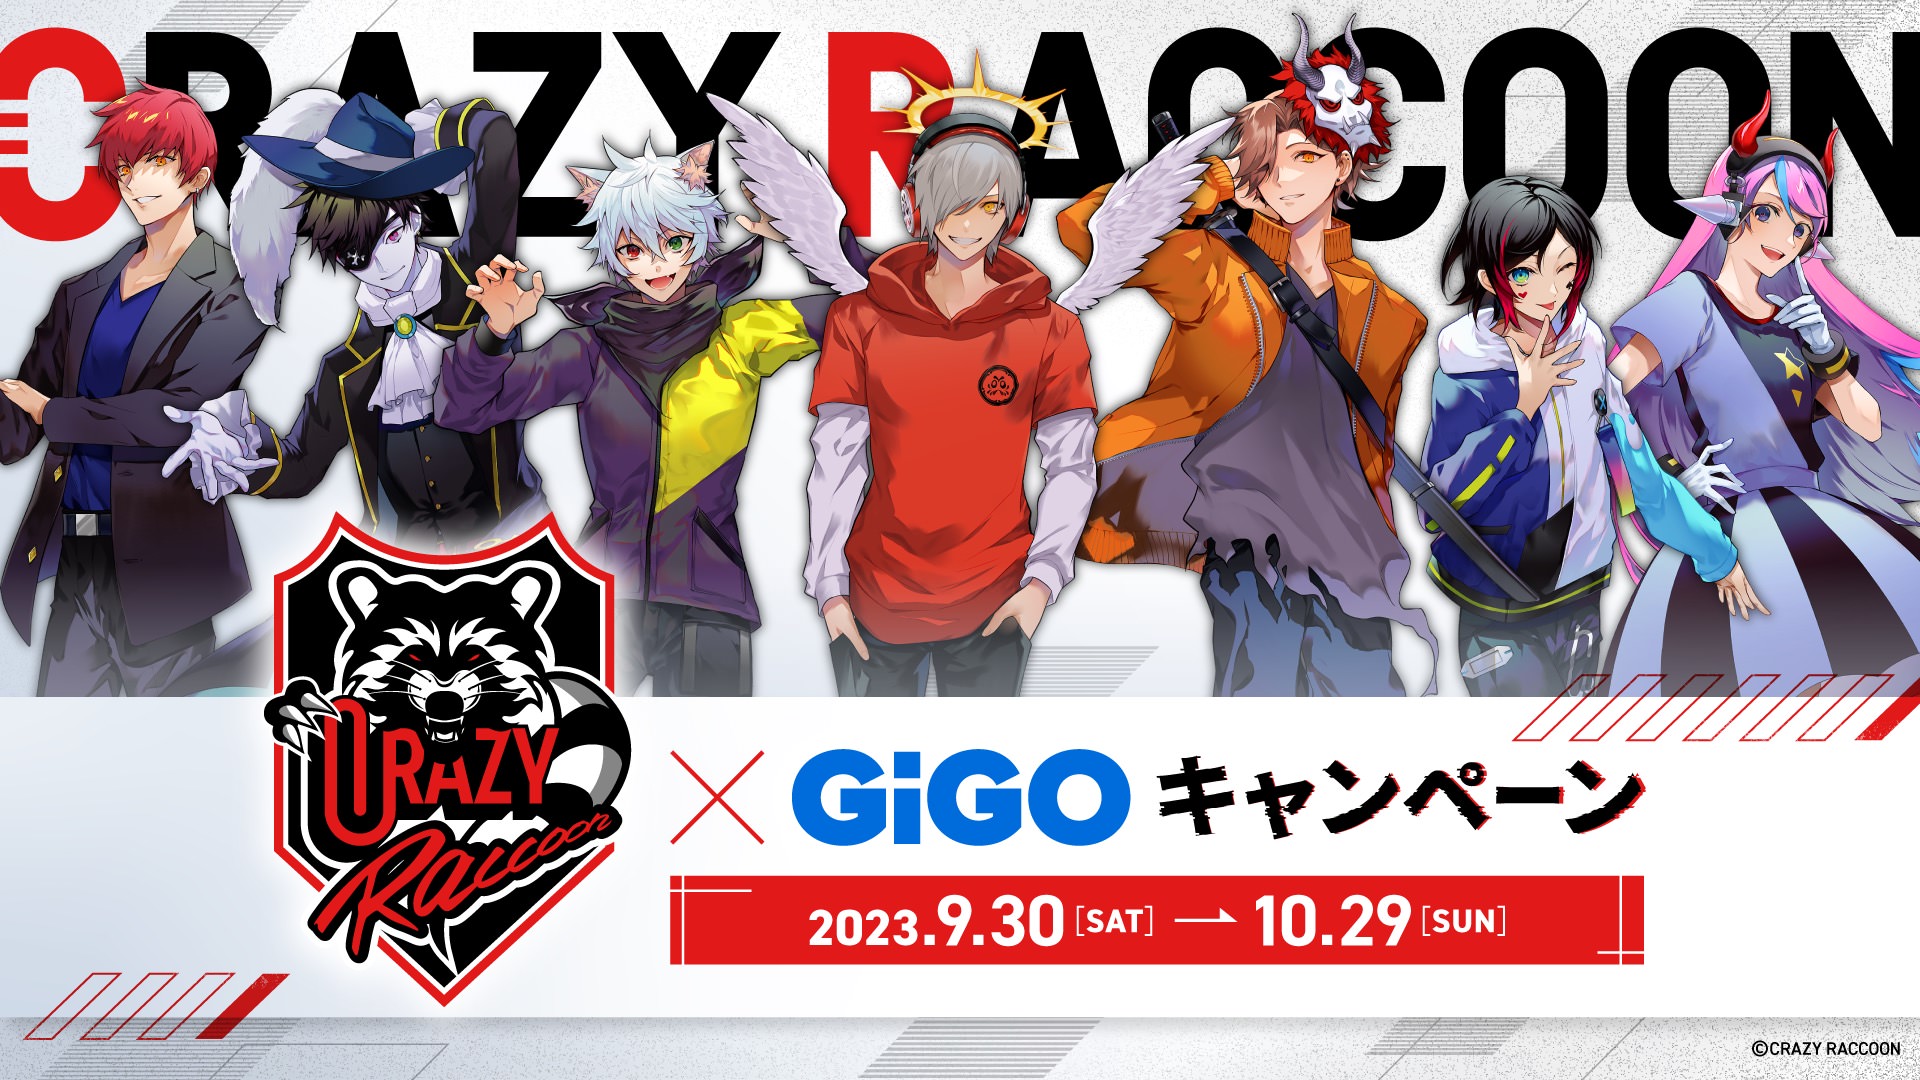 Crazy Raccoon × GiGO 9月30日よりコラボキャンペーン実施!